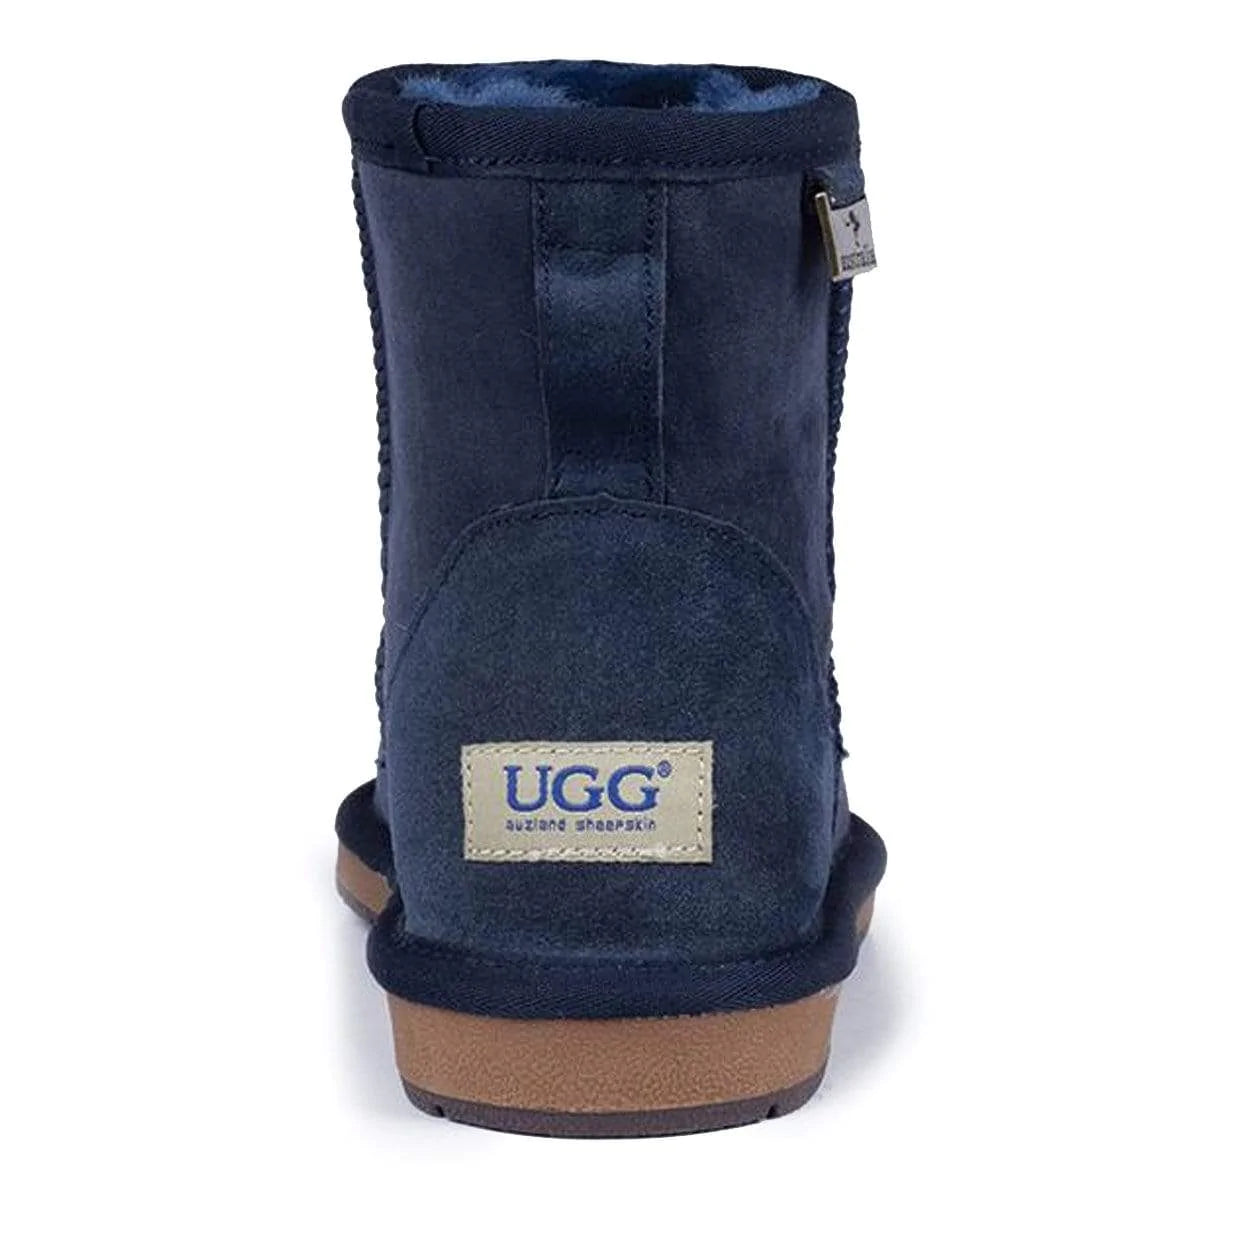 Ugg Boots - UGG Premium Mini Classic Boots - Original UGG Australia Classic